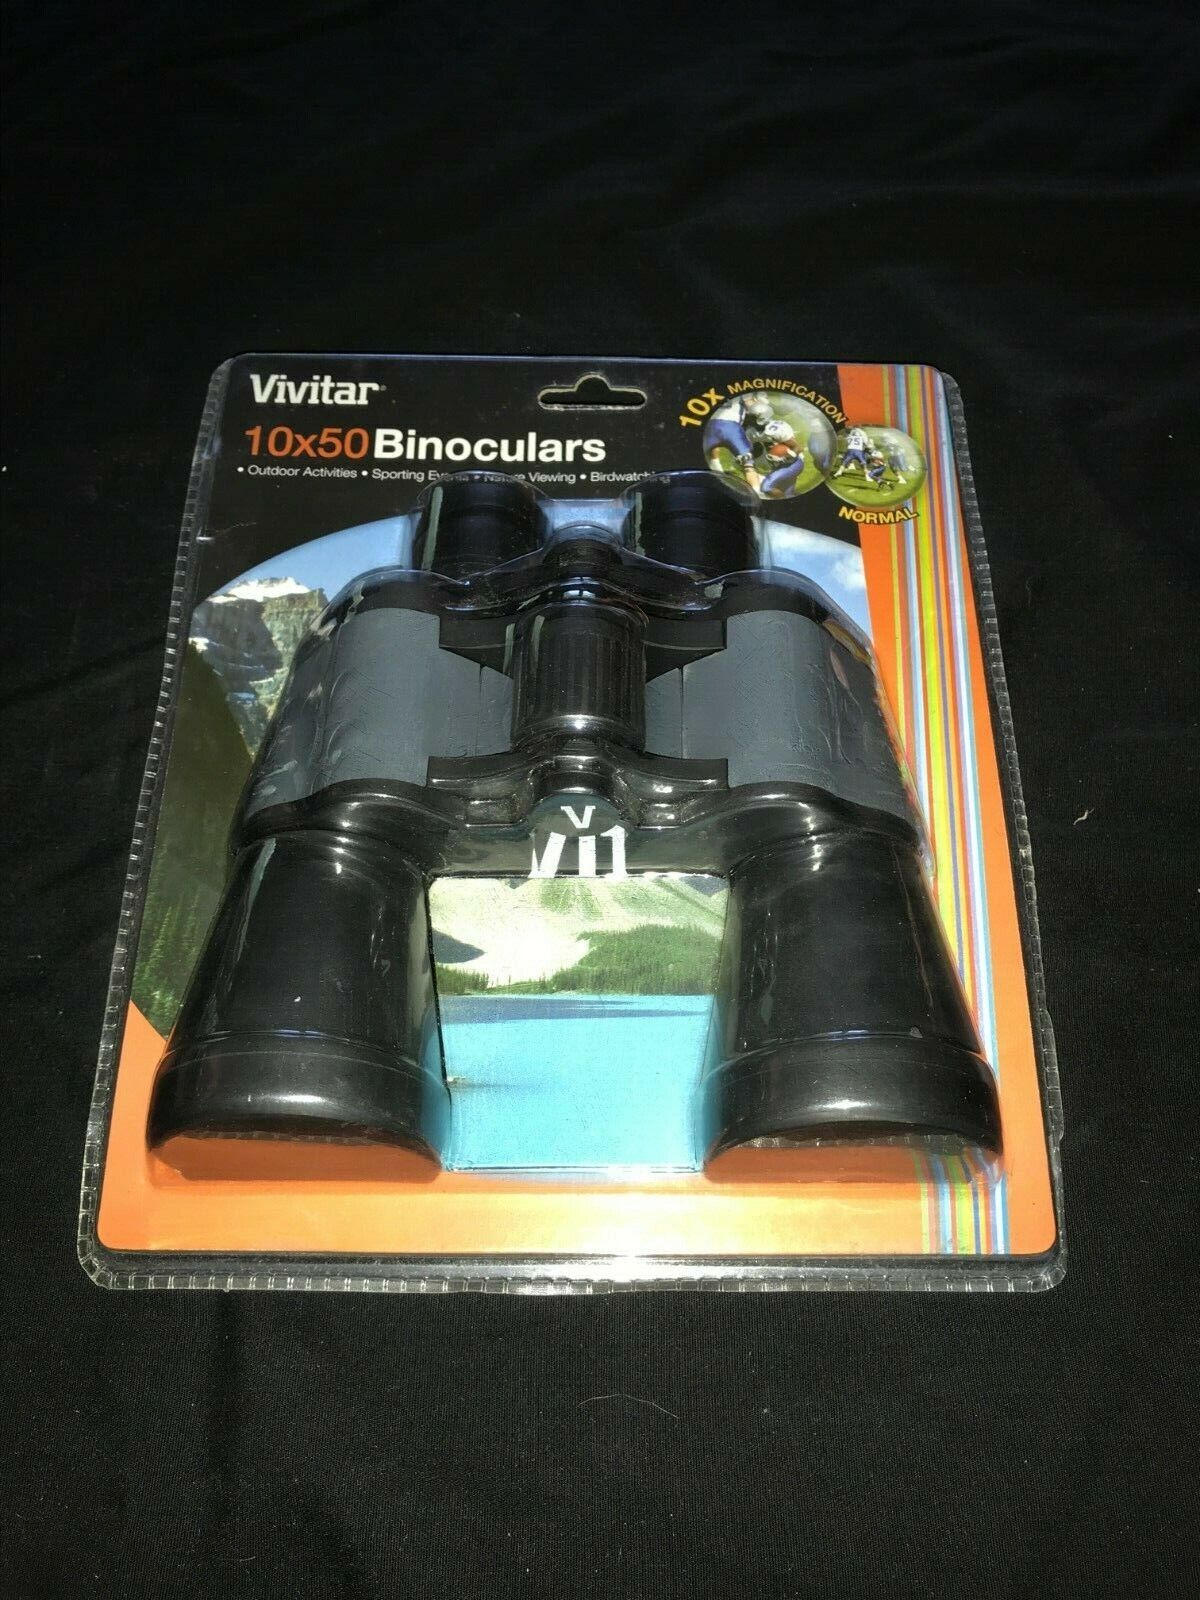 Vivitar Classic 10x50 Binoculars New in Package